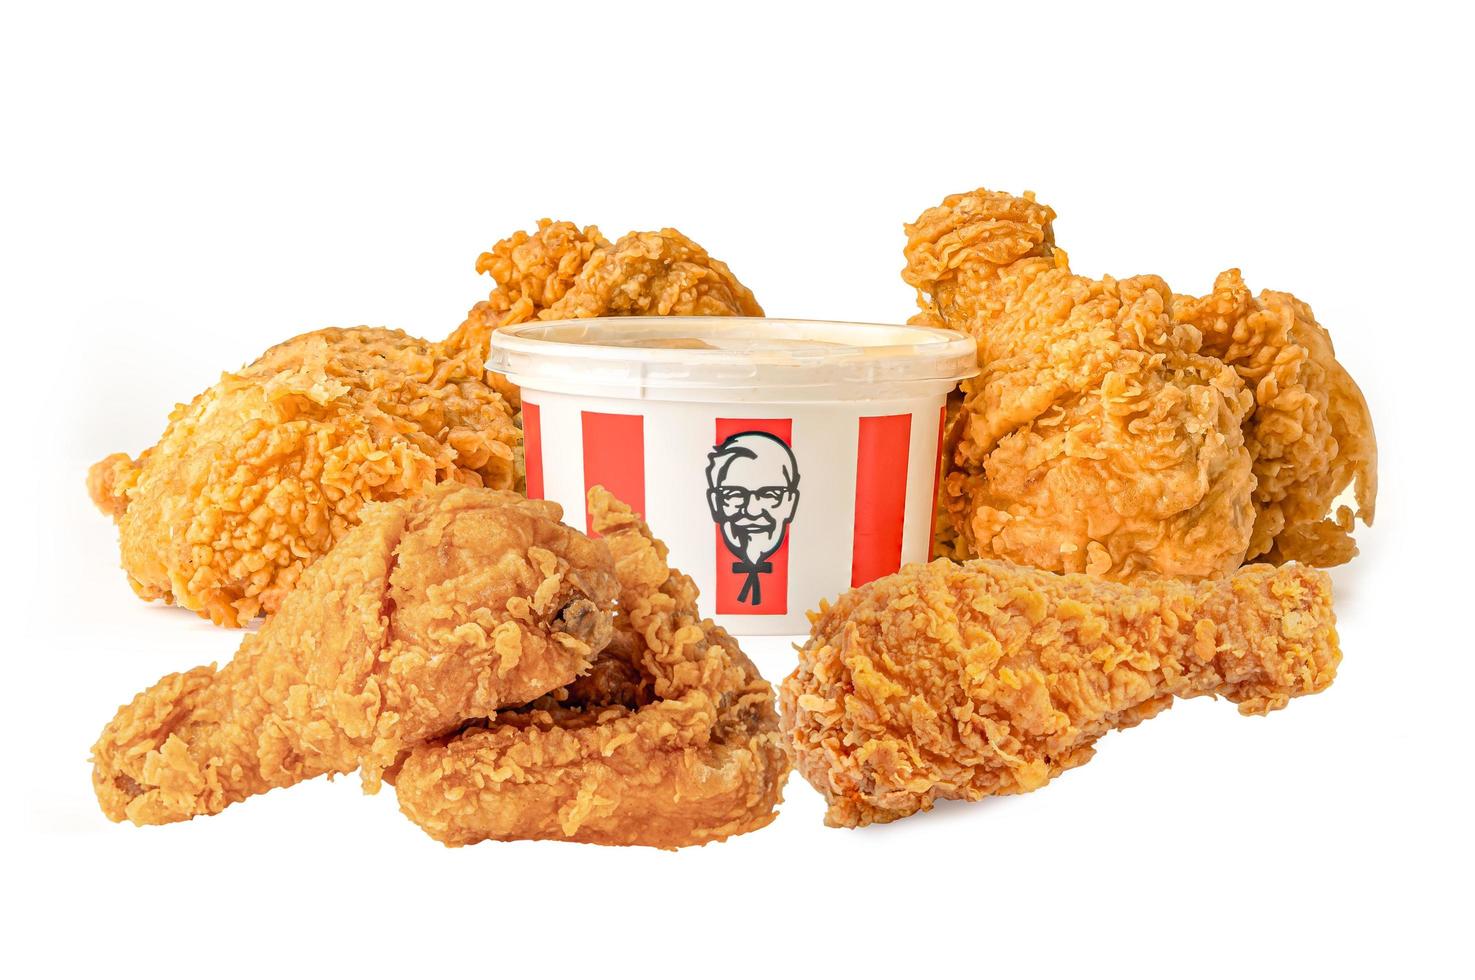 bangkok, tailandia 2020 - kfc, kentucky fried chicken con logo de marca foto